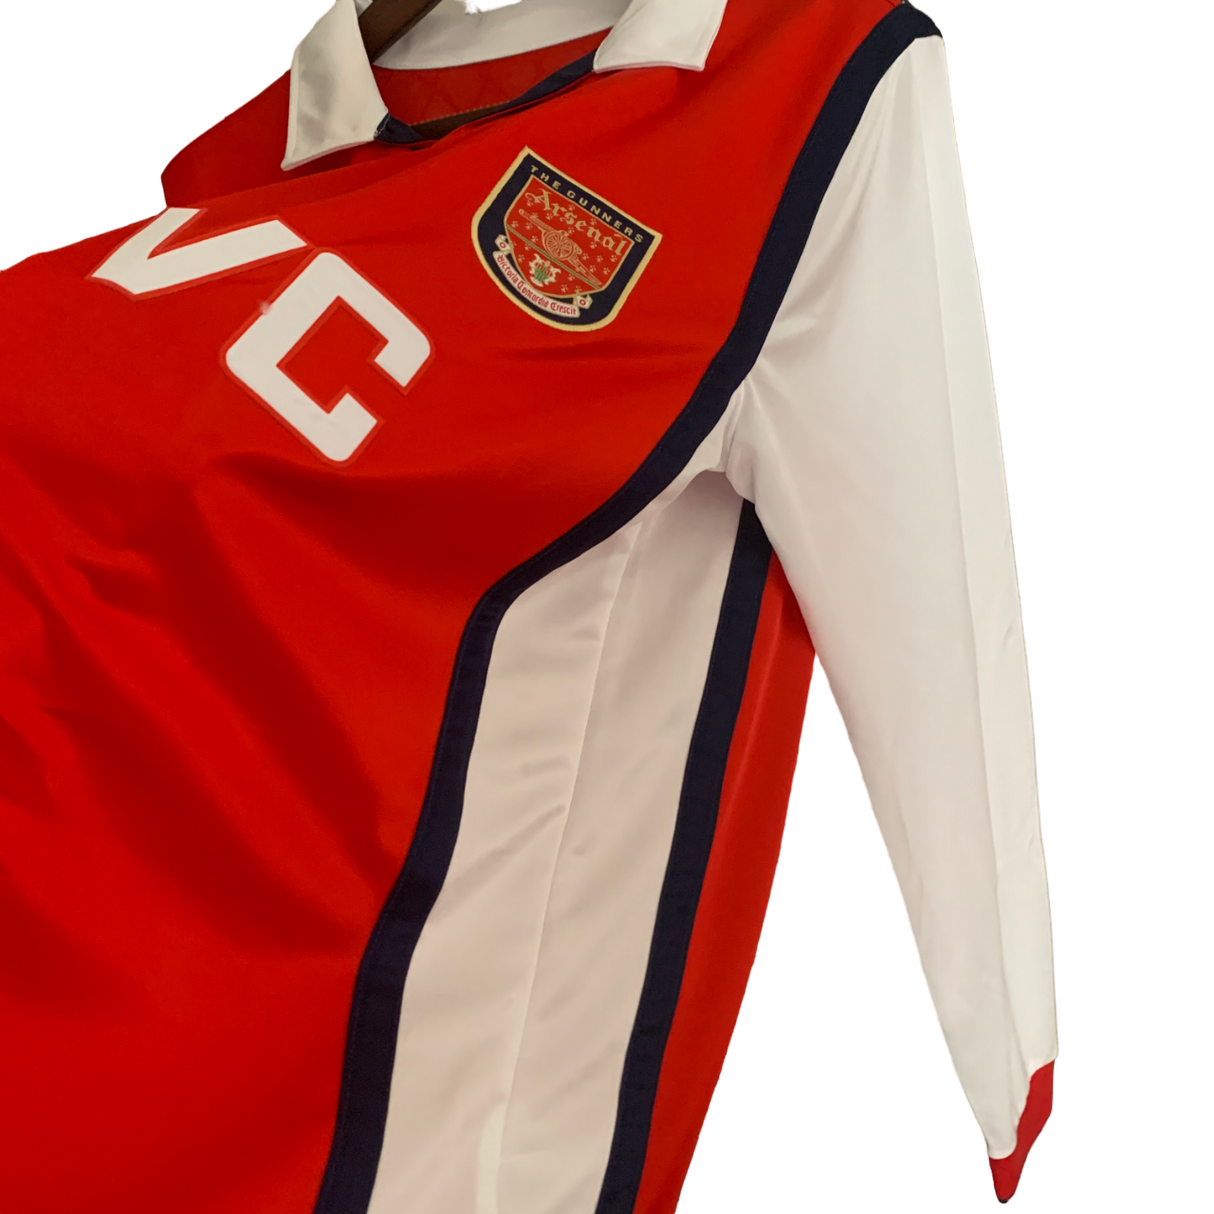 Arsenal Retro 98/99 long sleeve Home